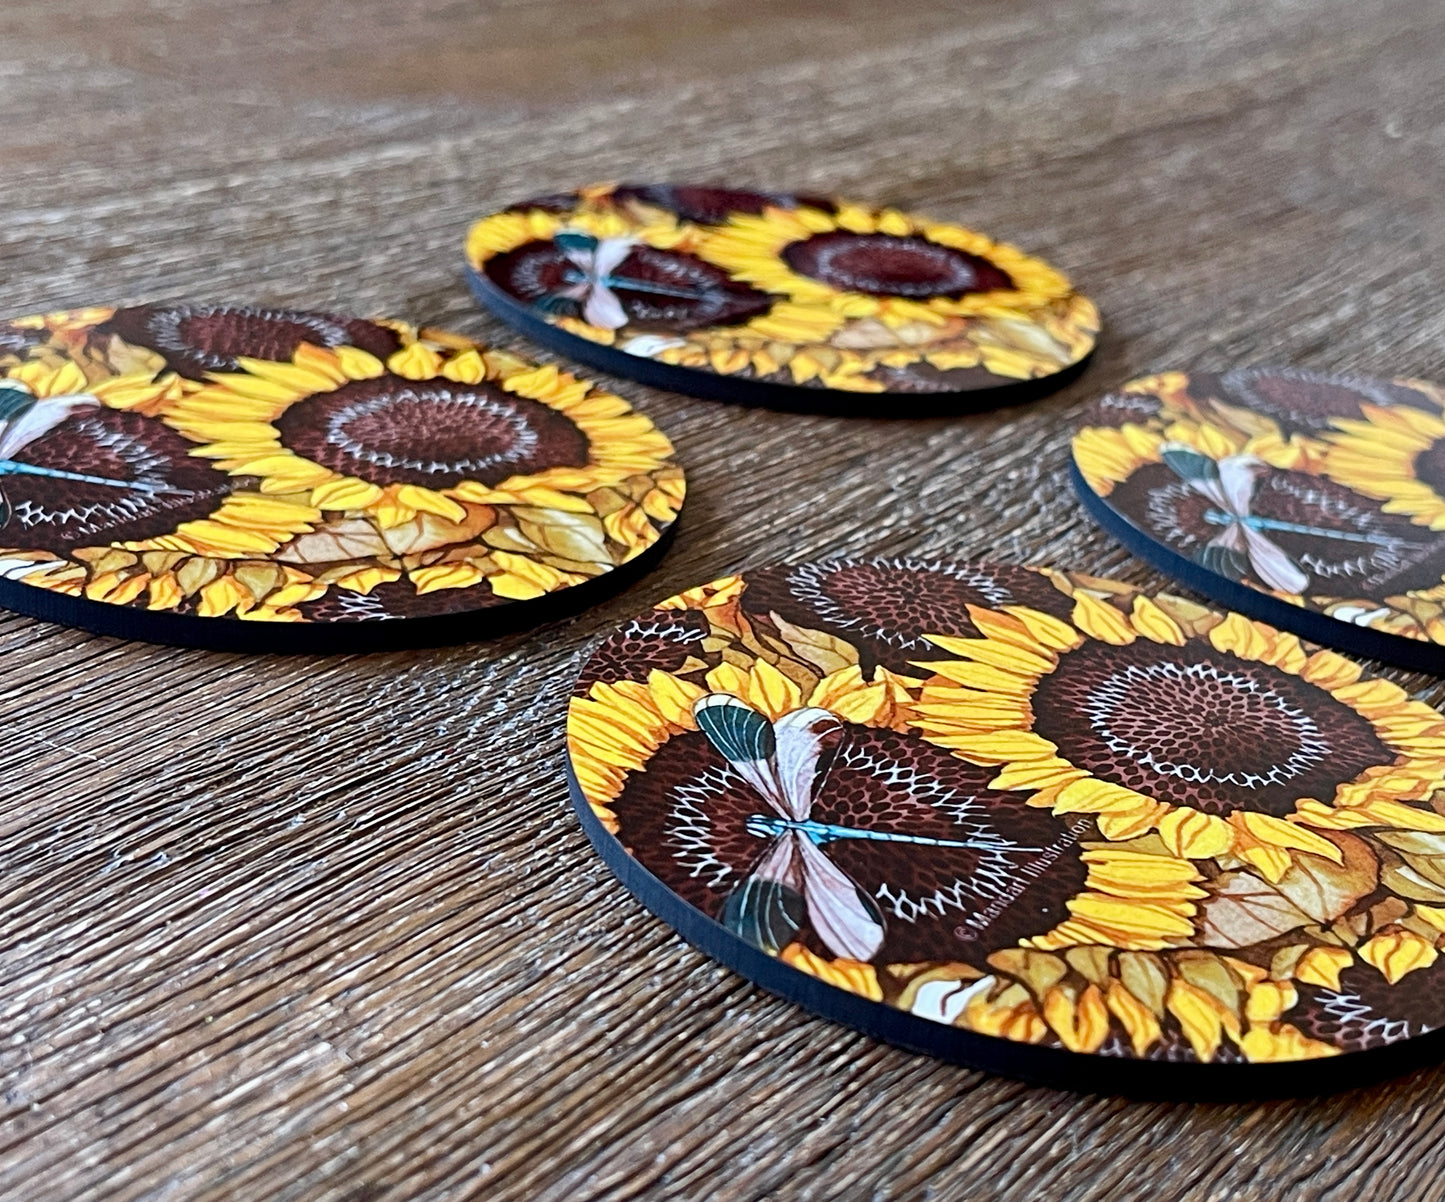 Sunflowers coasters